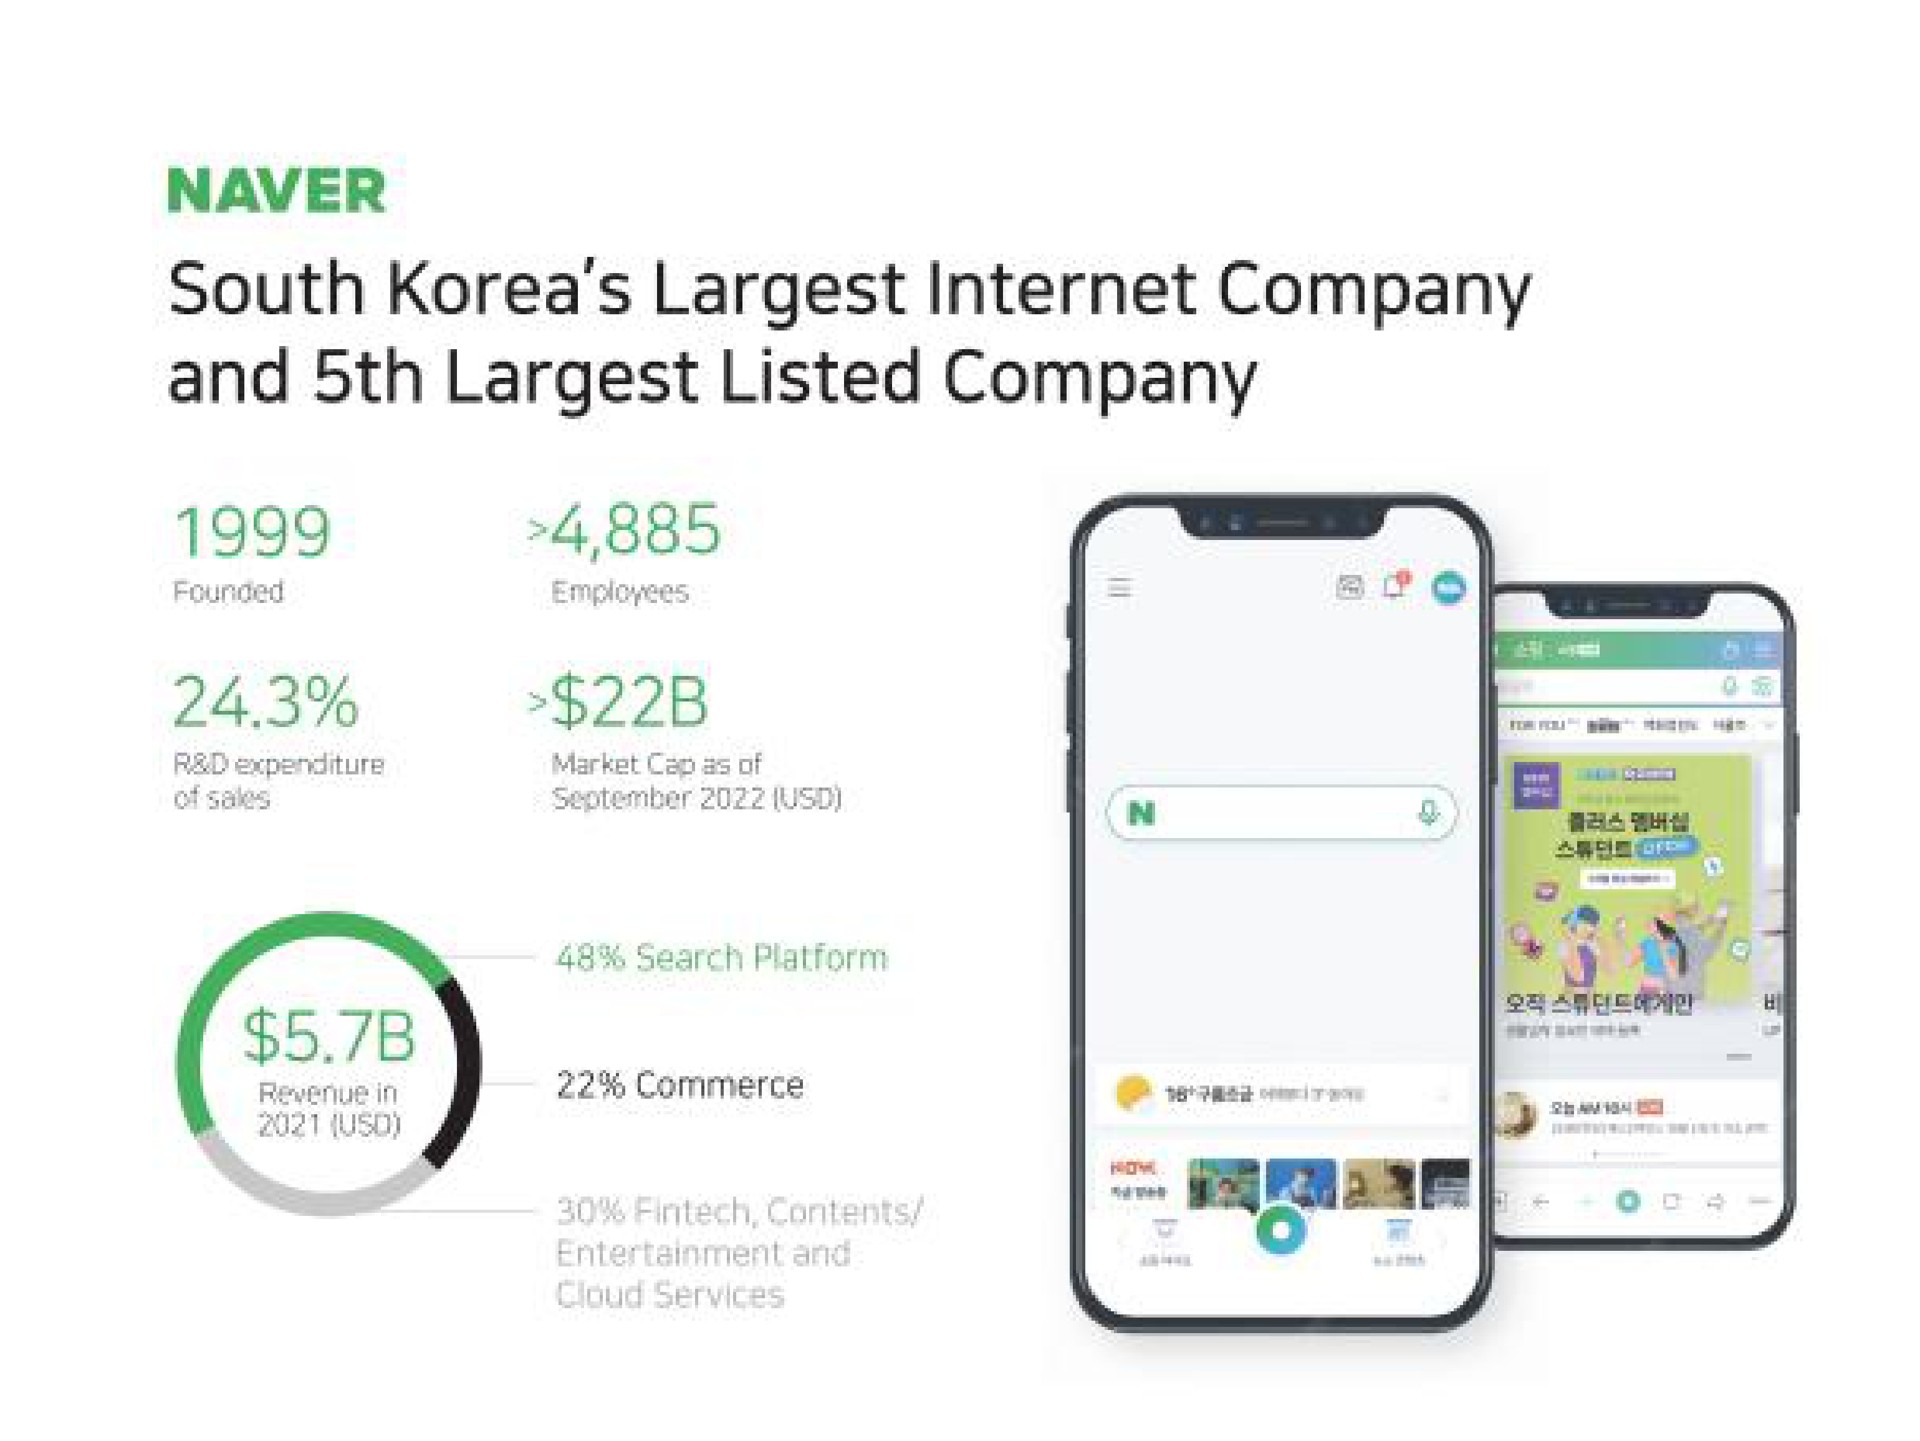 south company and listed company | Naver